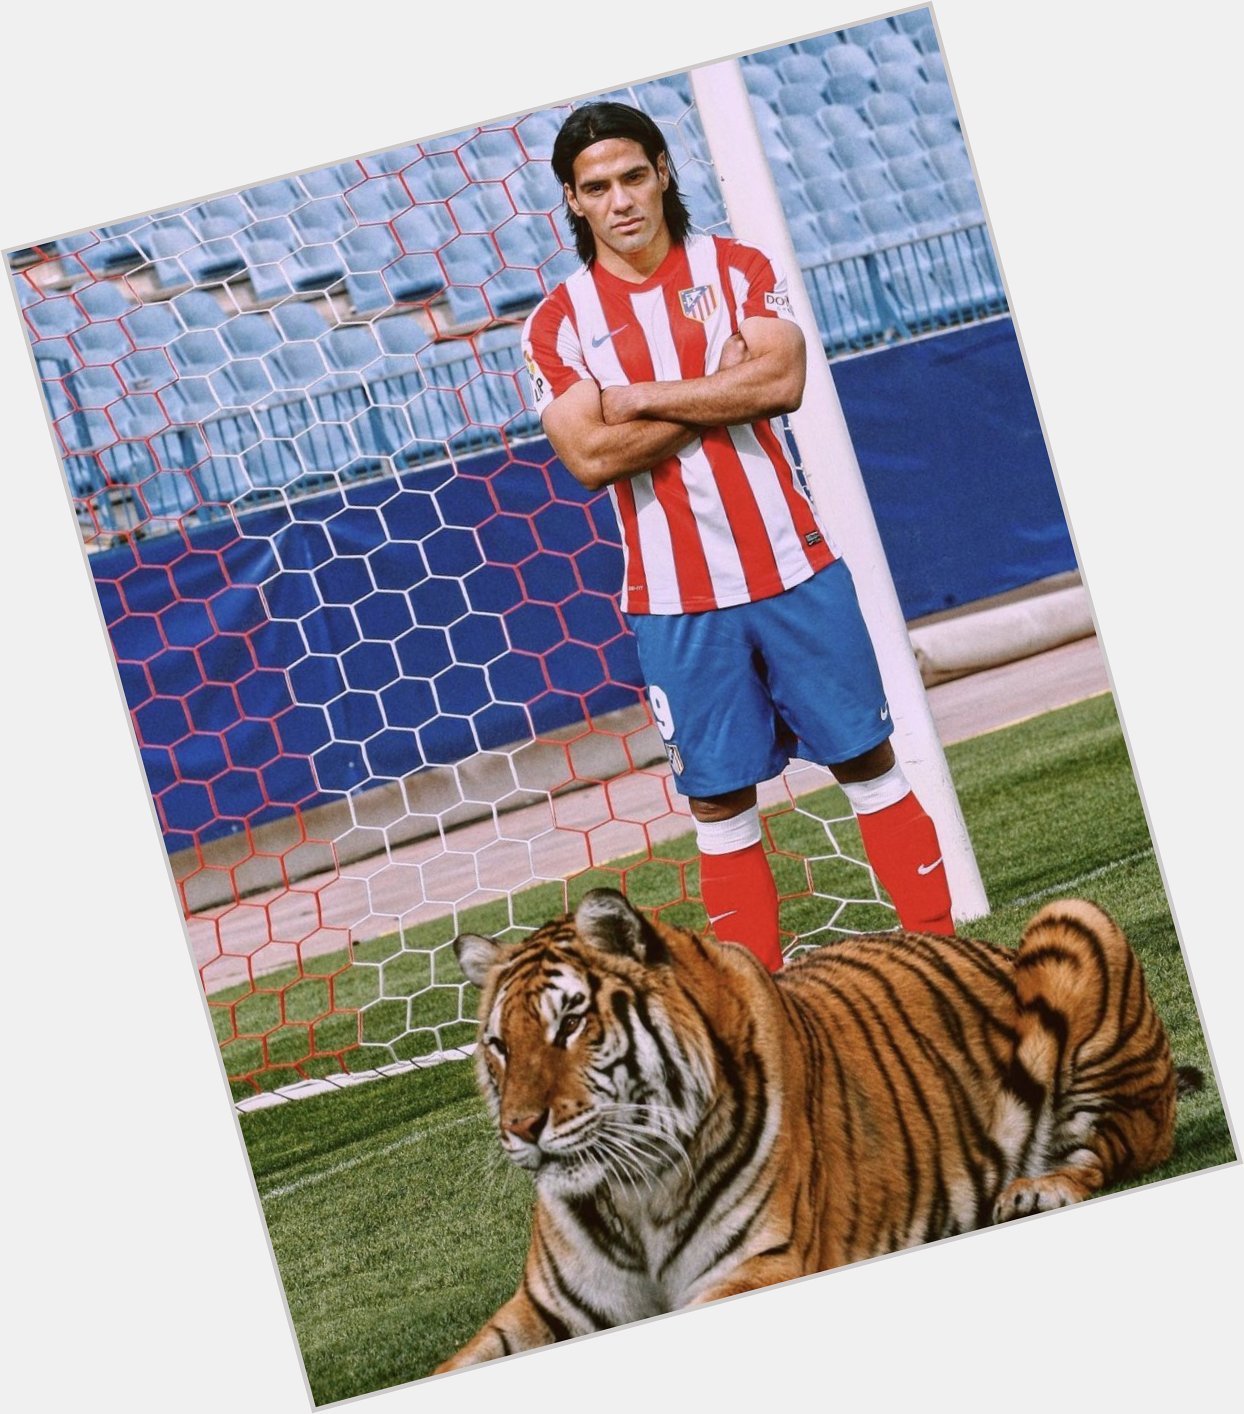 We\d like to wish an Happy birthday to El Tigre himself, Radamel Falcao 